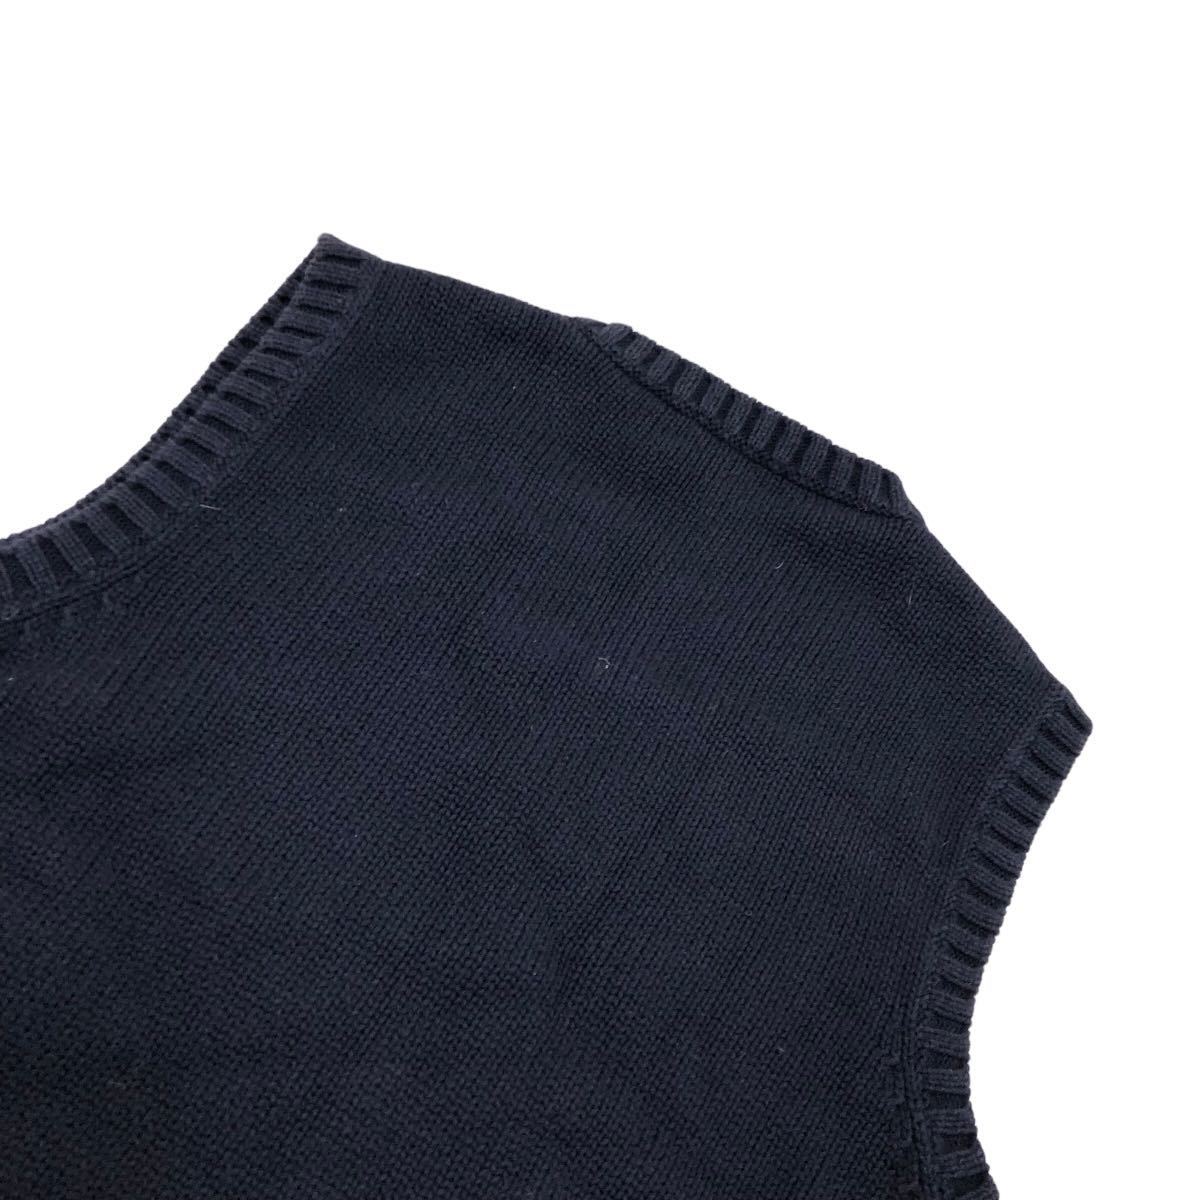 S184 large size RALPH LAUREN Ralph Lauren the best knitted the best tops no sleeve cotton knitted cotton 100% cotton LL navy navy blue 